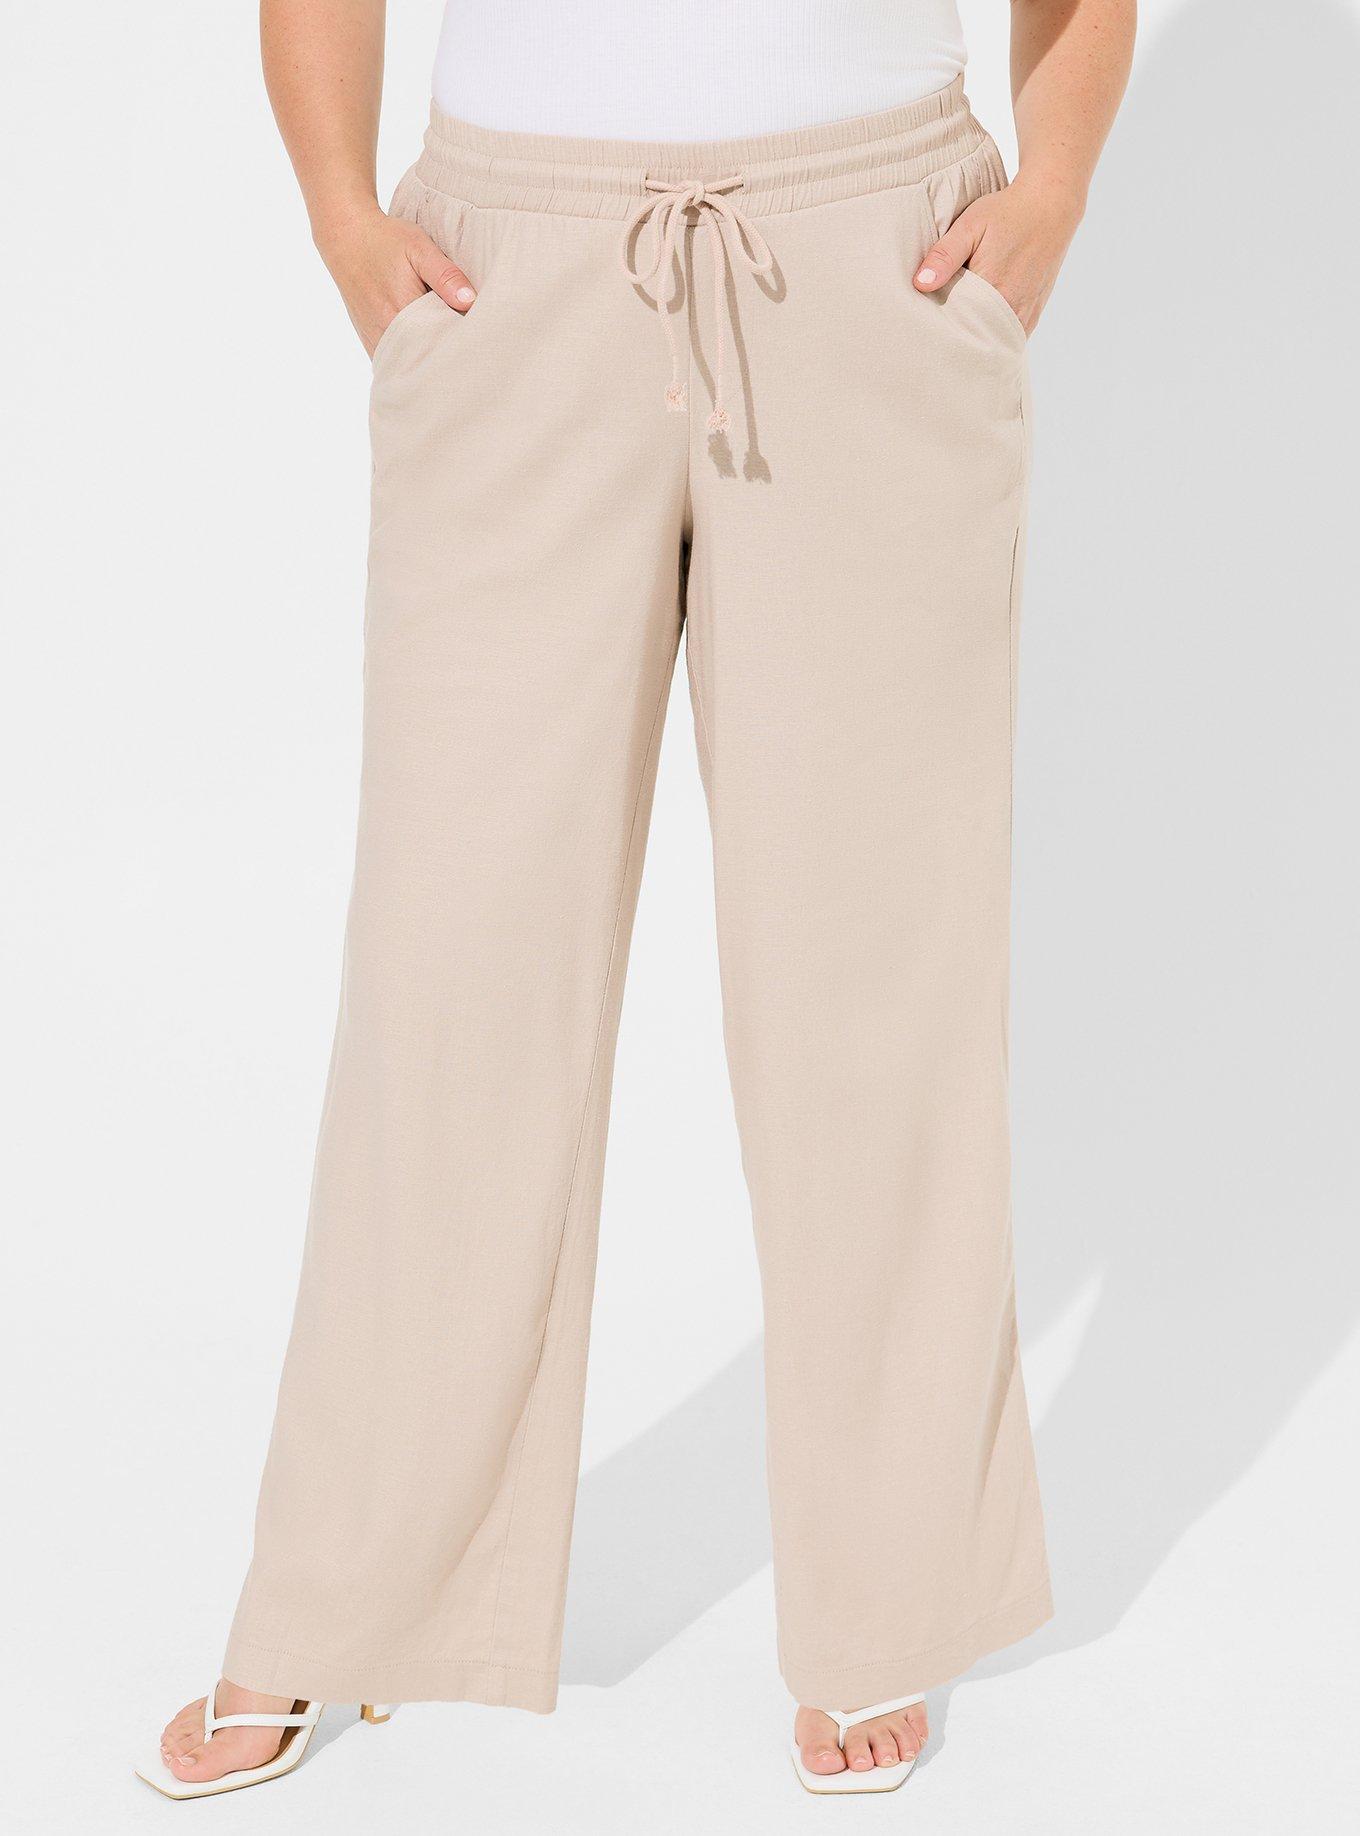 Linen PALAZZO Pants, 28, 30, 32, 34 Inches Inseam Options, Wide Leg Linen  Pants, High Waist Full Length Pants, Linen Flare Pants -  Canada